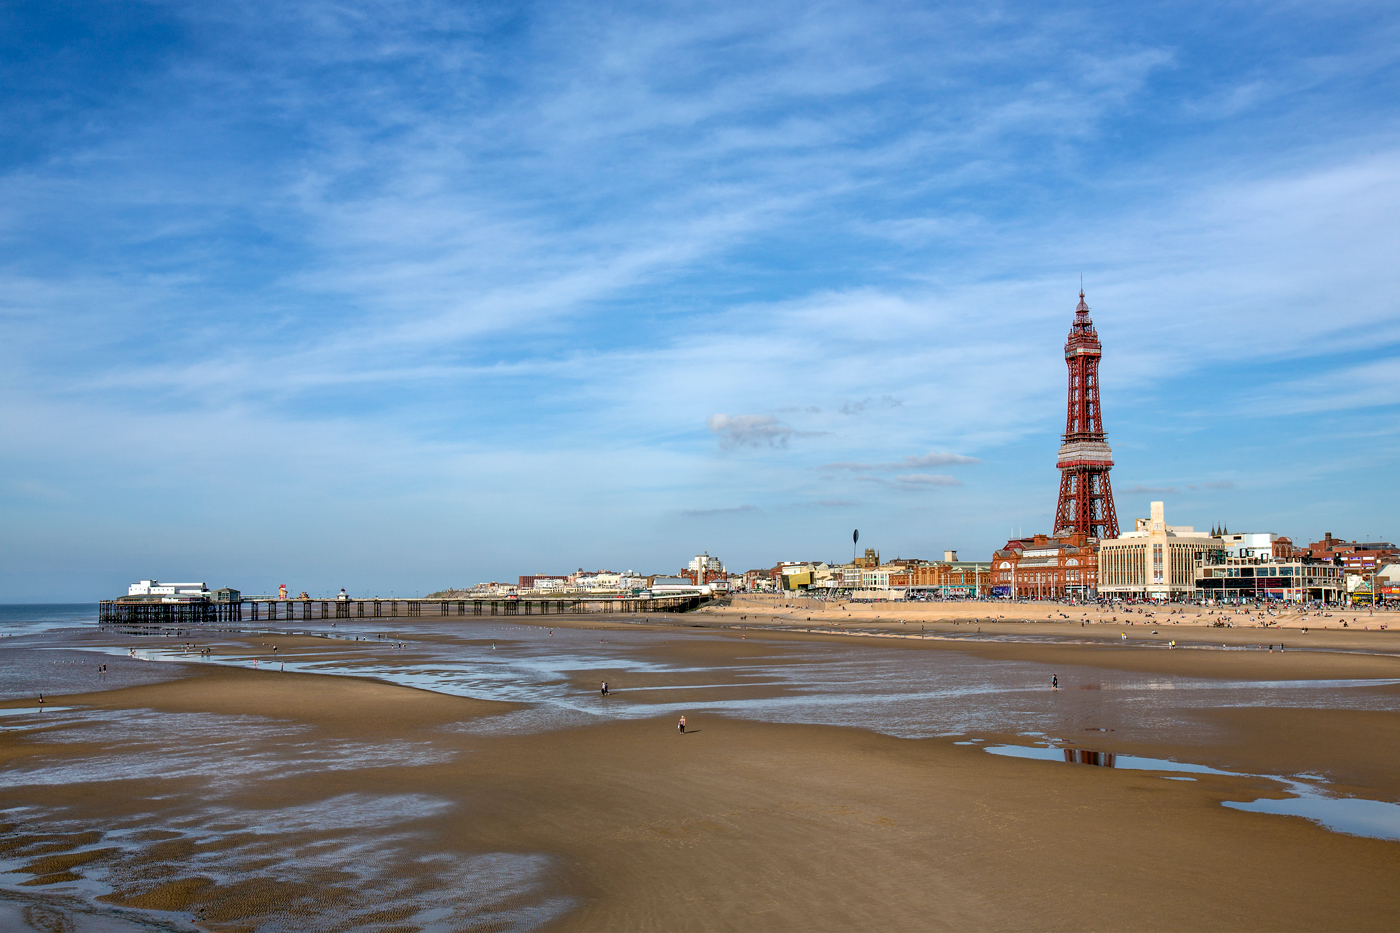 Blackpool Tower and Pier. Photo SteveAllenPhoto999 via Envato Elements